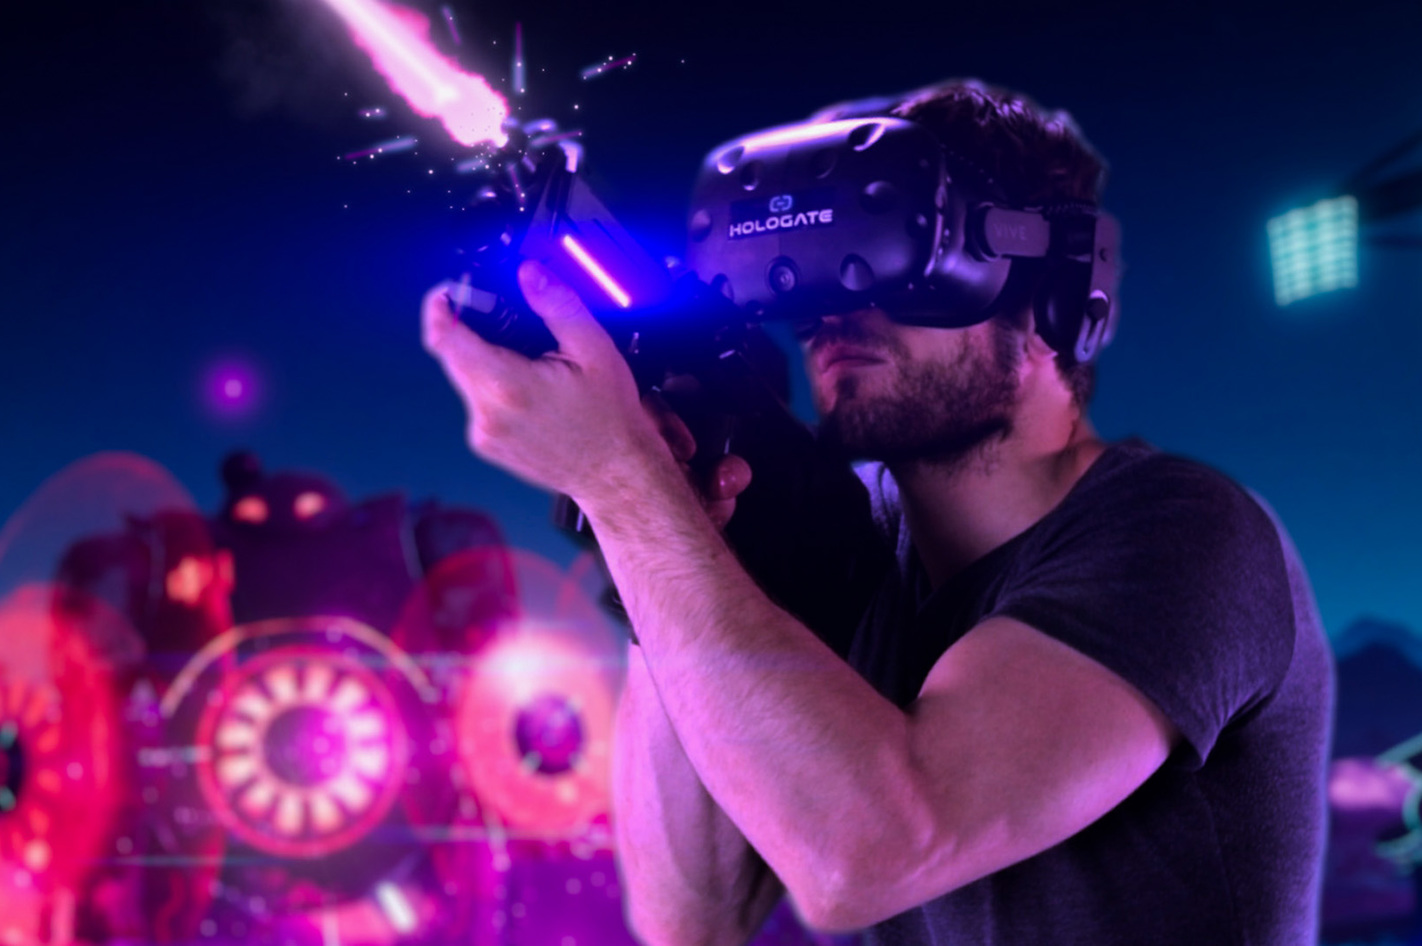 Virtual Reality Spiel Stuttgart